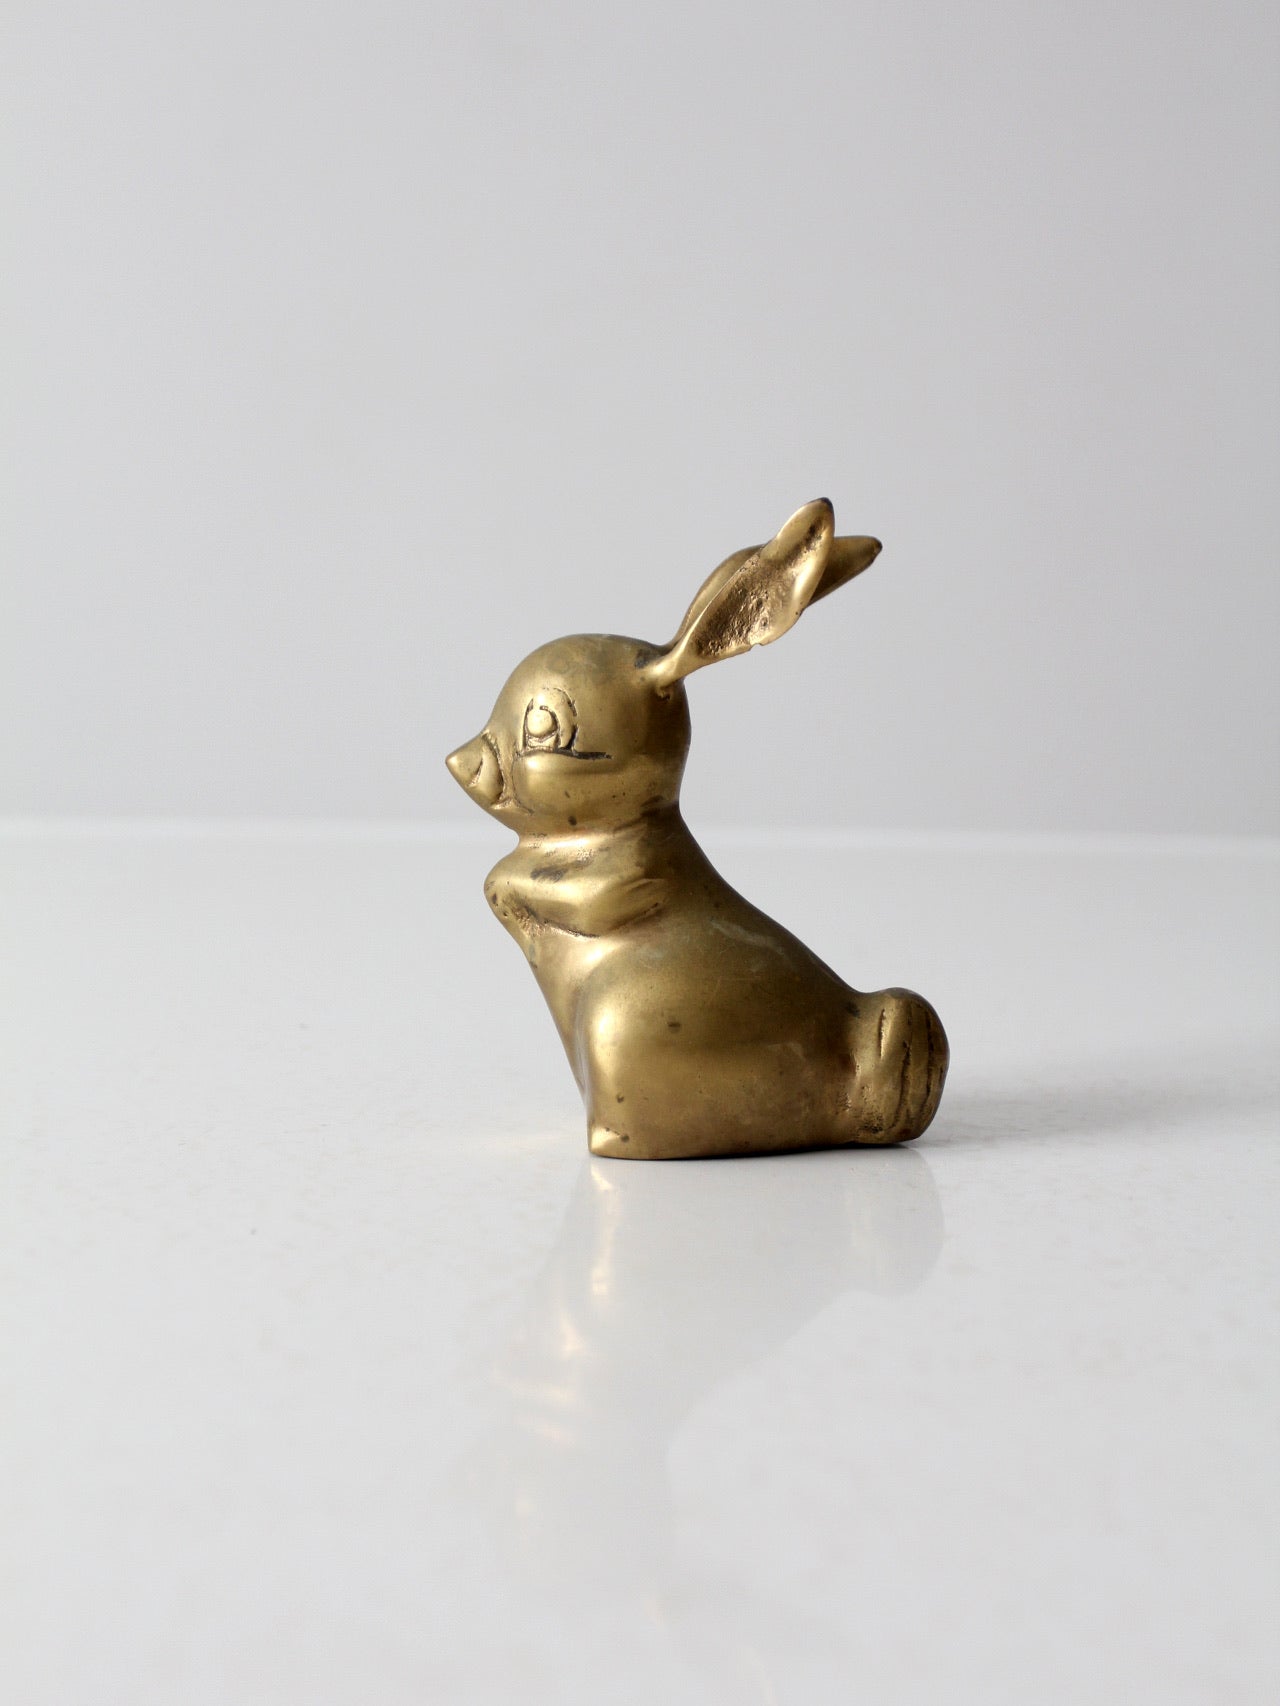 Vintage Brass Bunny Rabbit Paper Weight